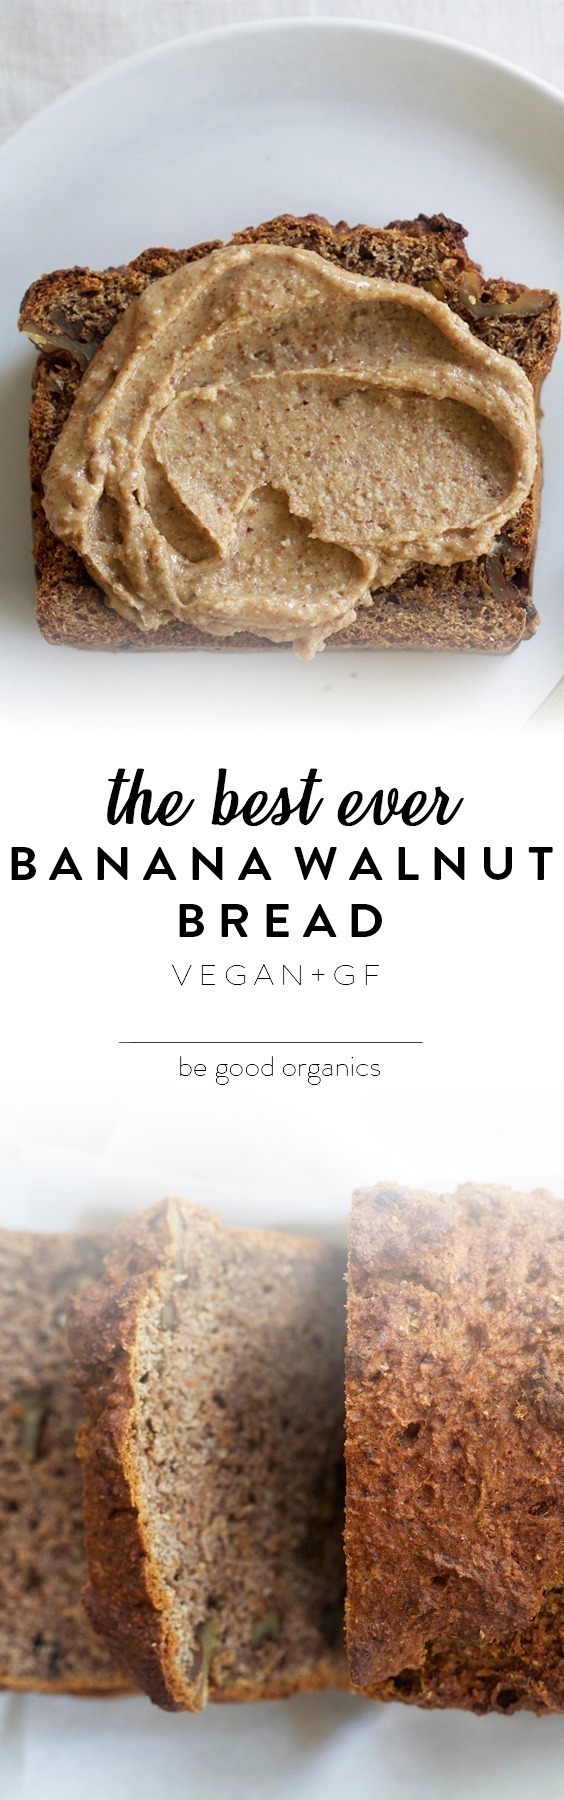 Vegan Gluten Free BANANA WALNUT BREAD - healthy, low sugar, recipe, breakfast, no refined sugar, dairy free, egg free